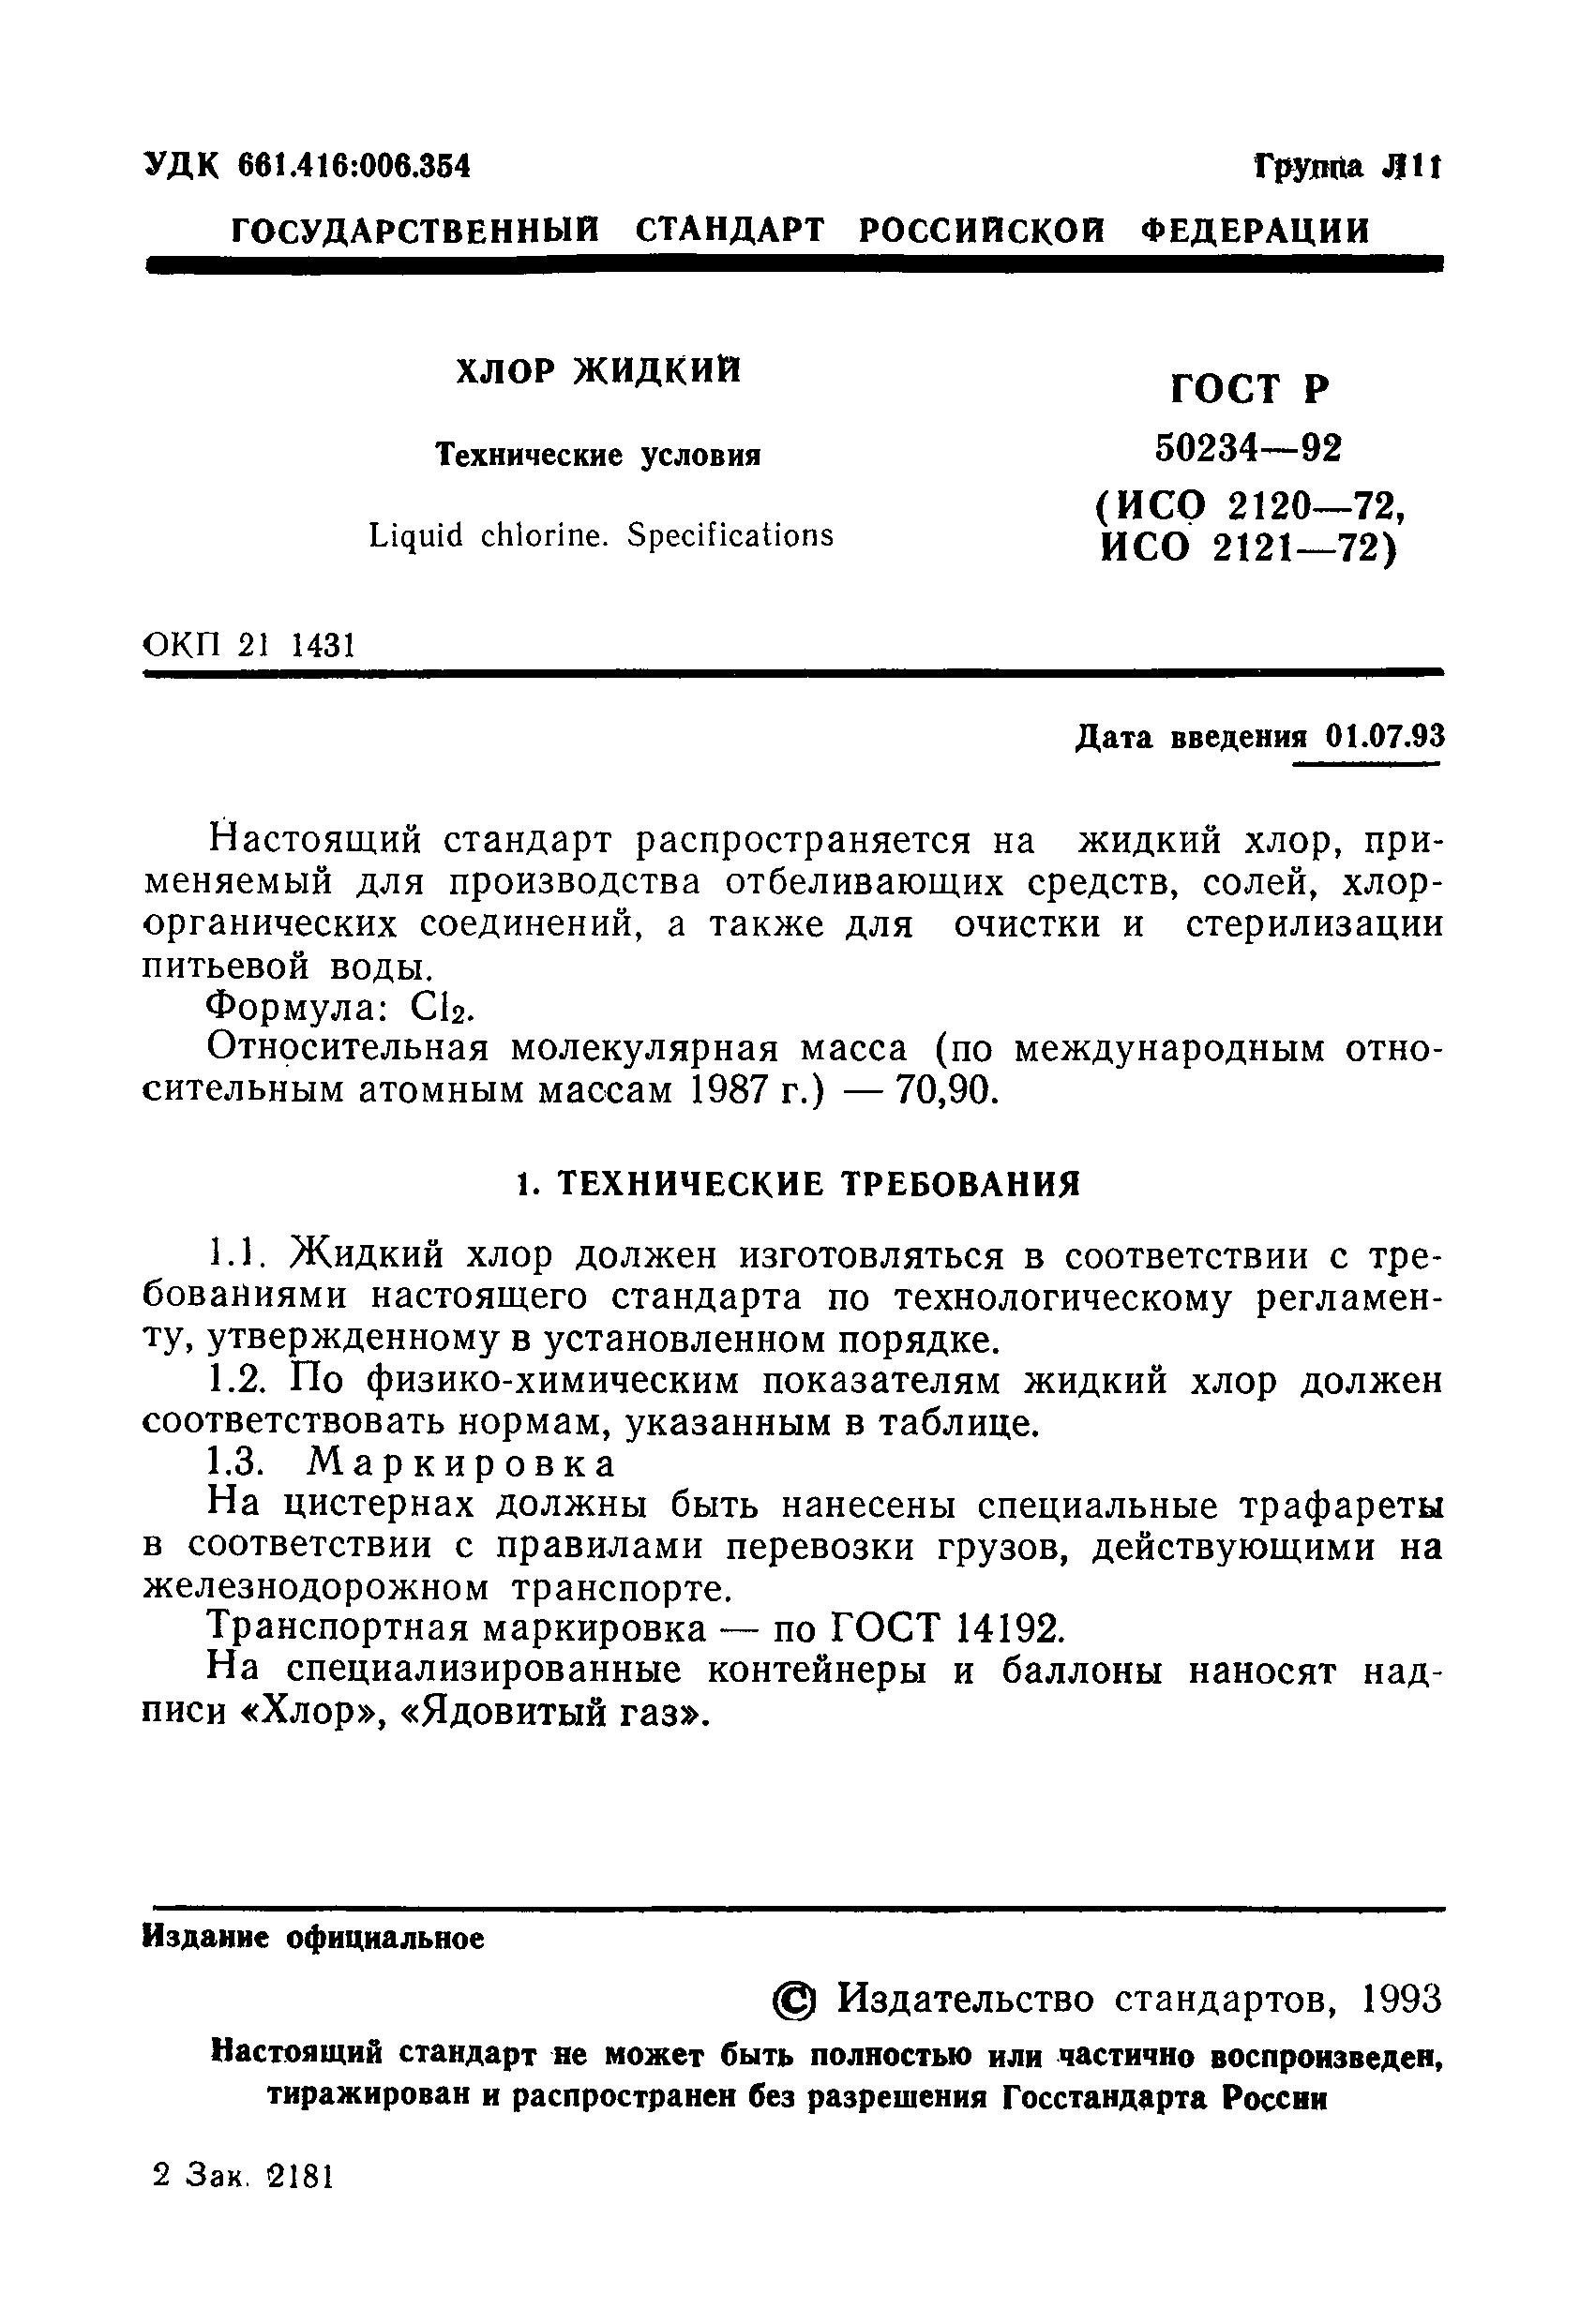 ГОСТ Р 50234-92